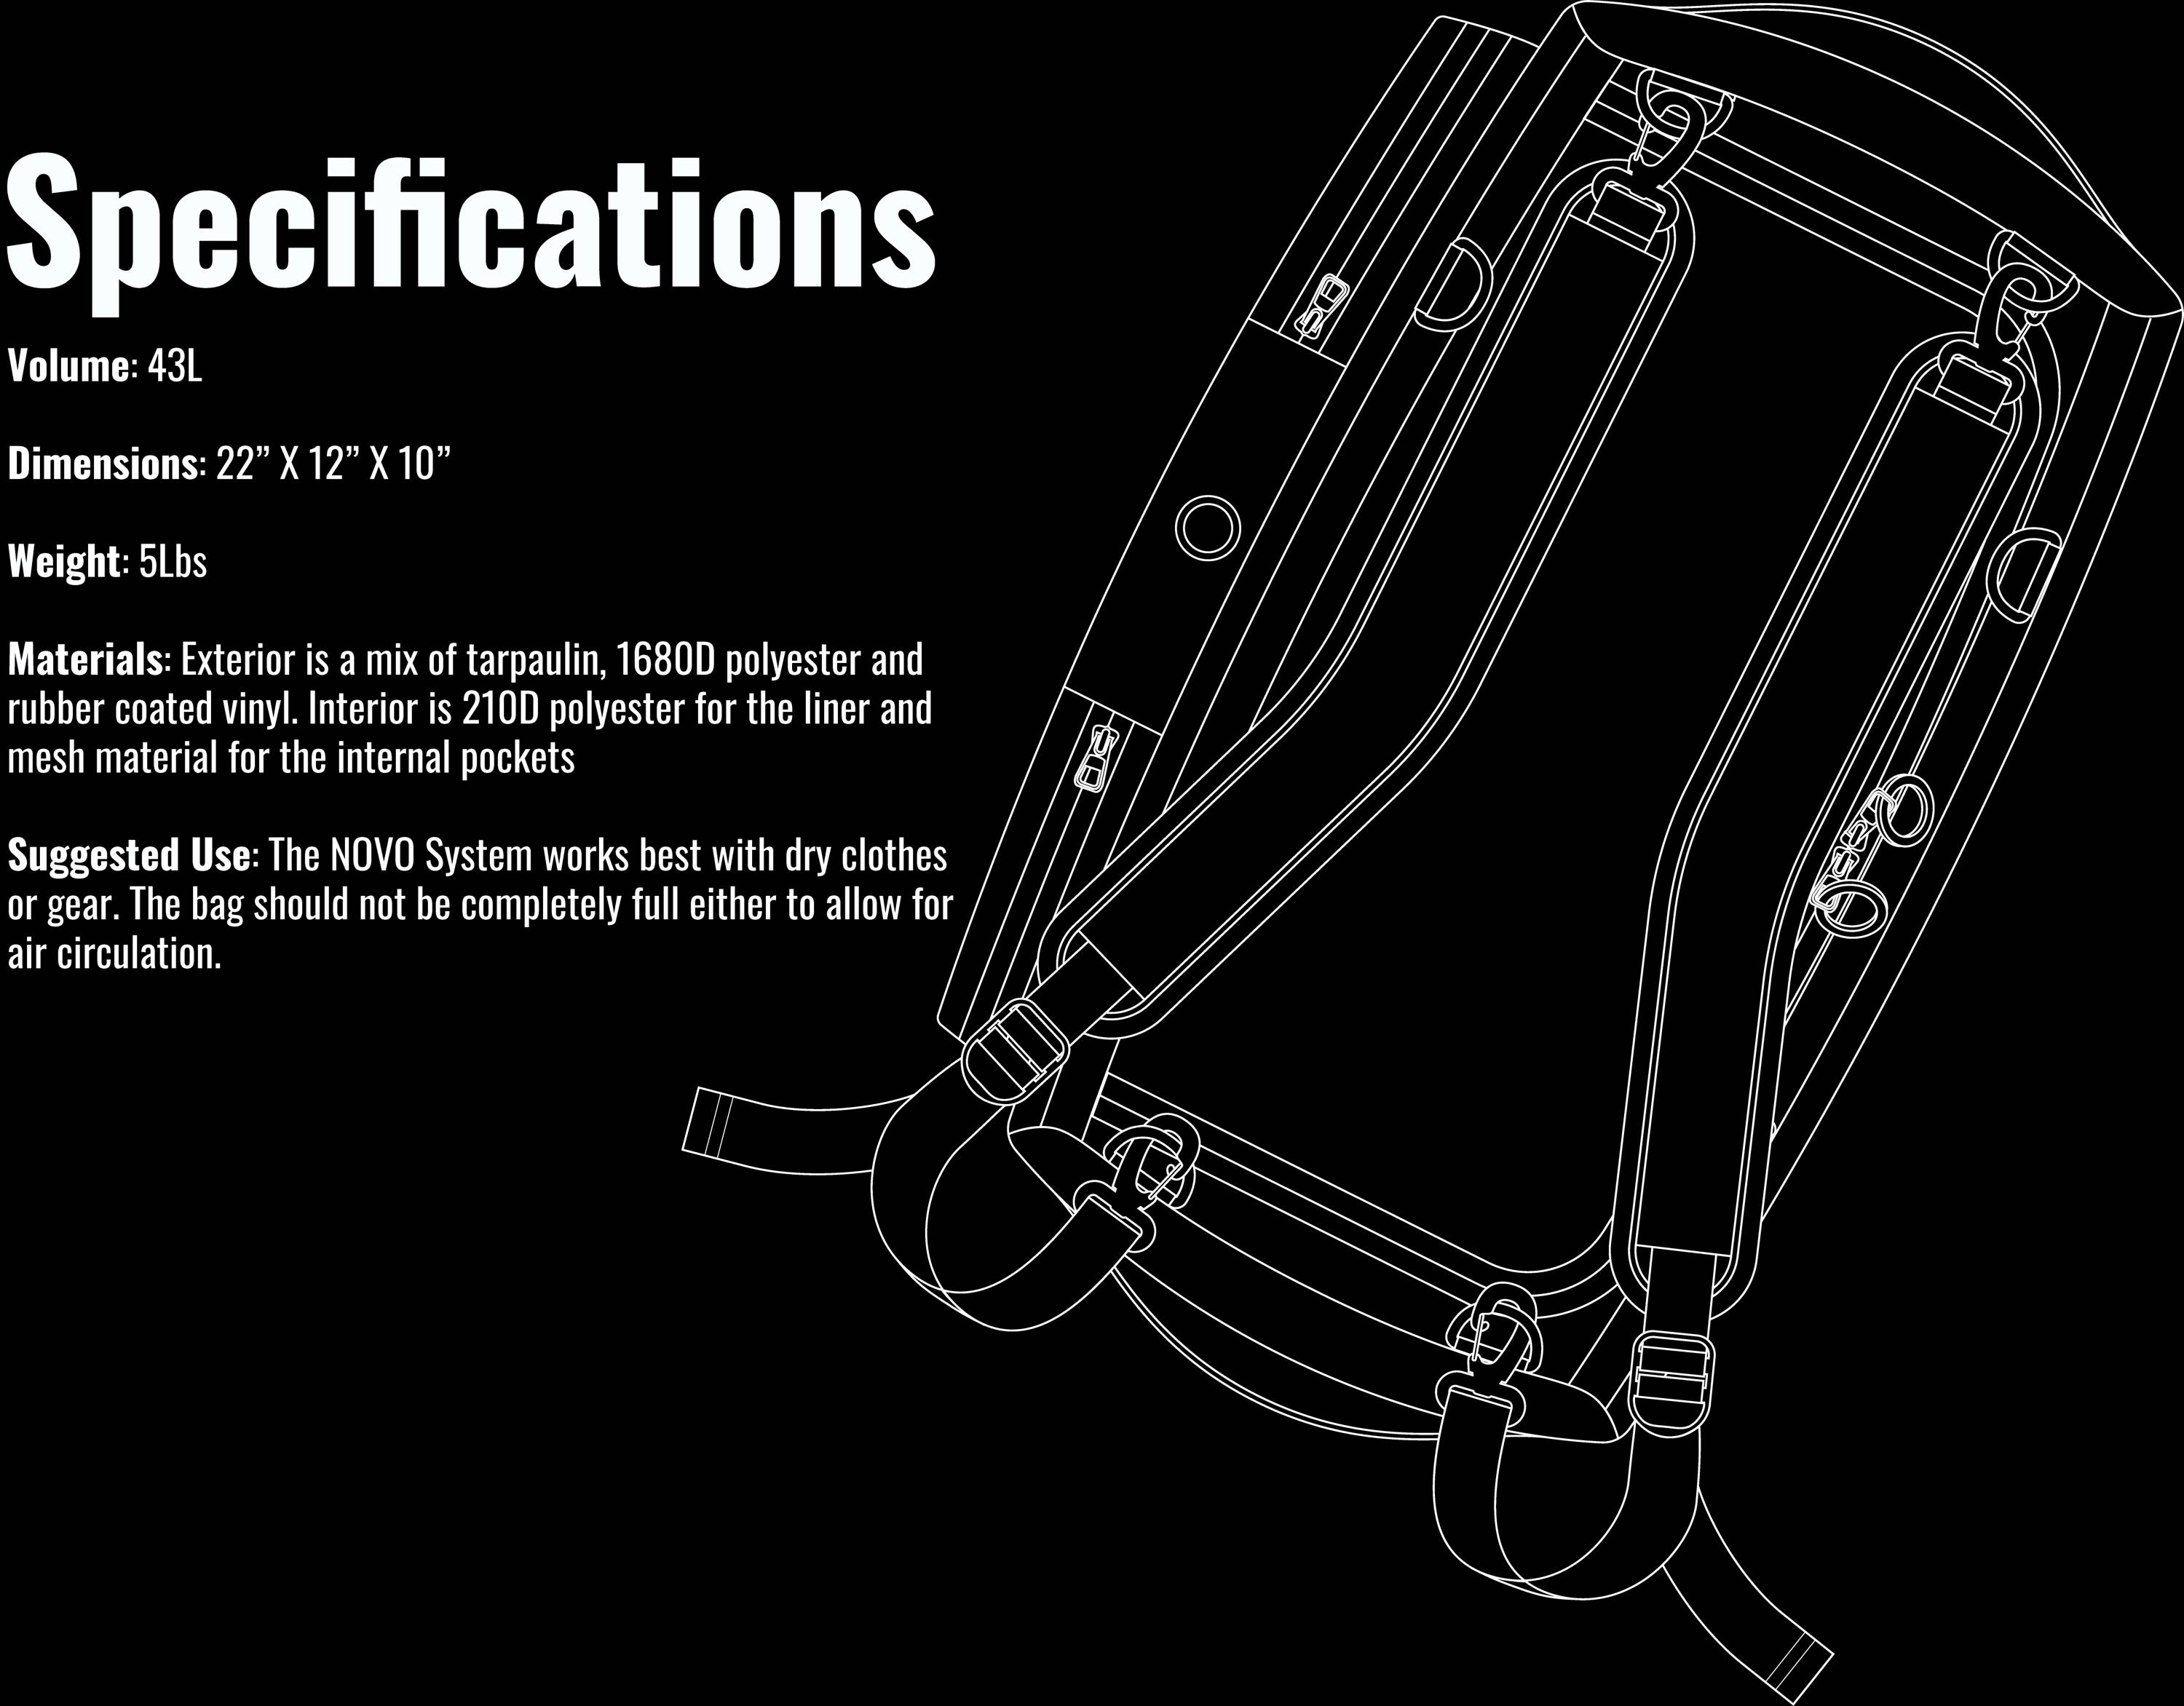 Full specifications on the Novo Smart Bag